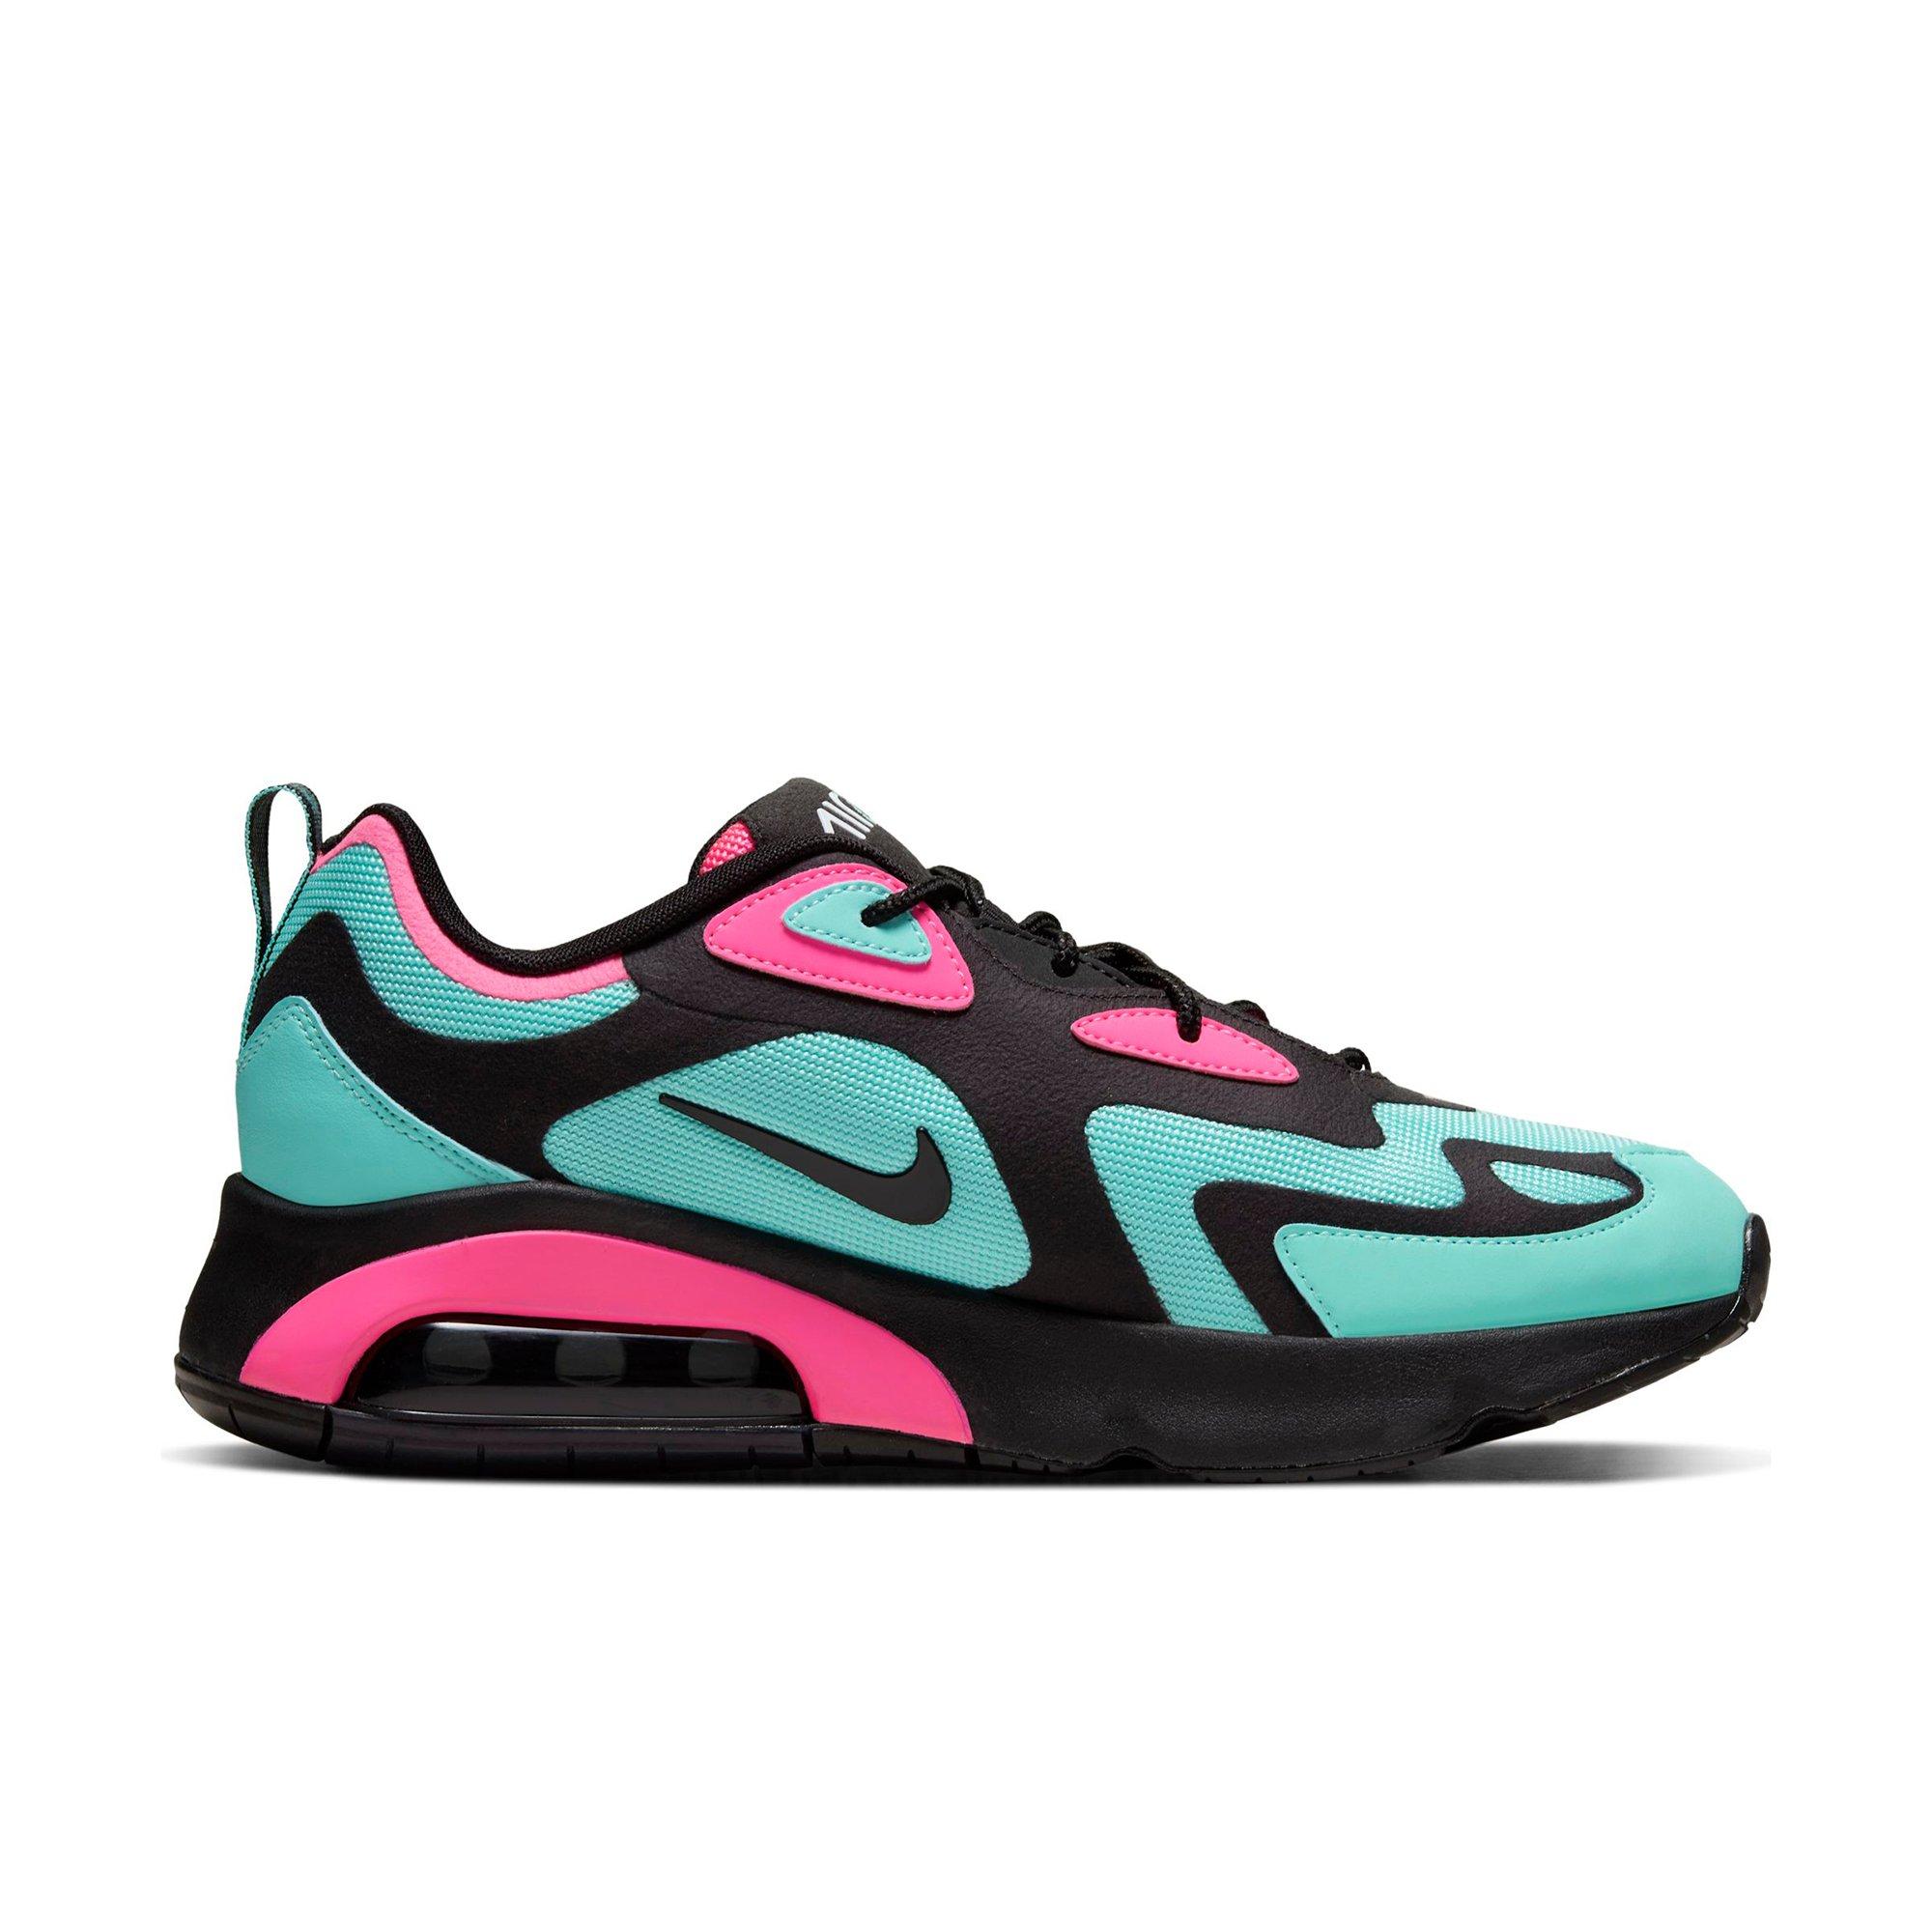 Nike Air Max 200 “Hyper Turq/Black/Pink 